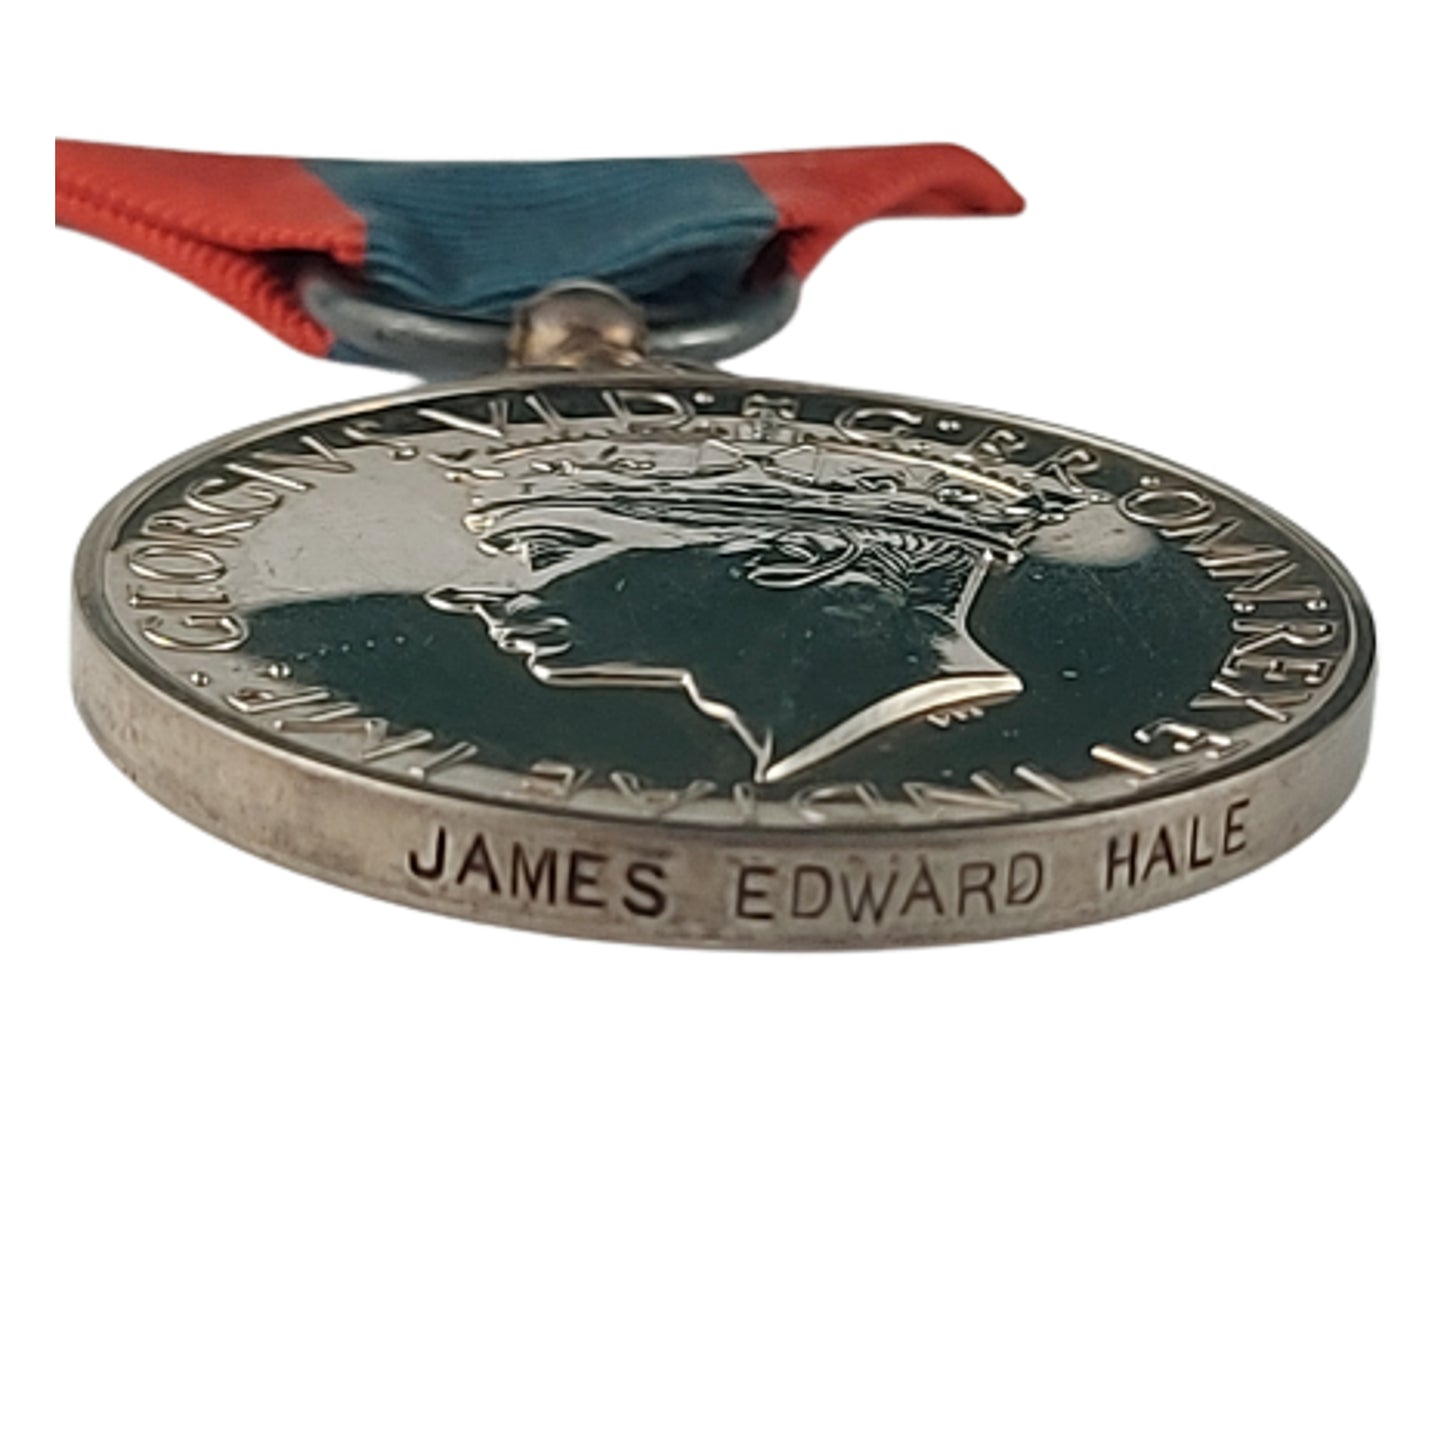 Canadian Imperial Service Medal -Regina Saskatchewan